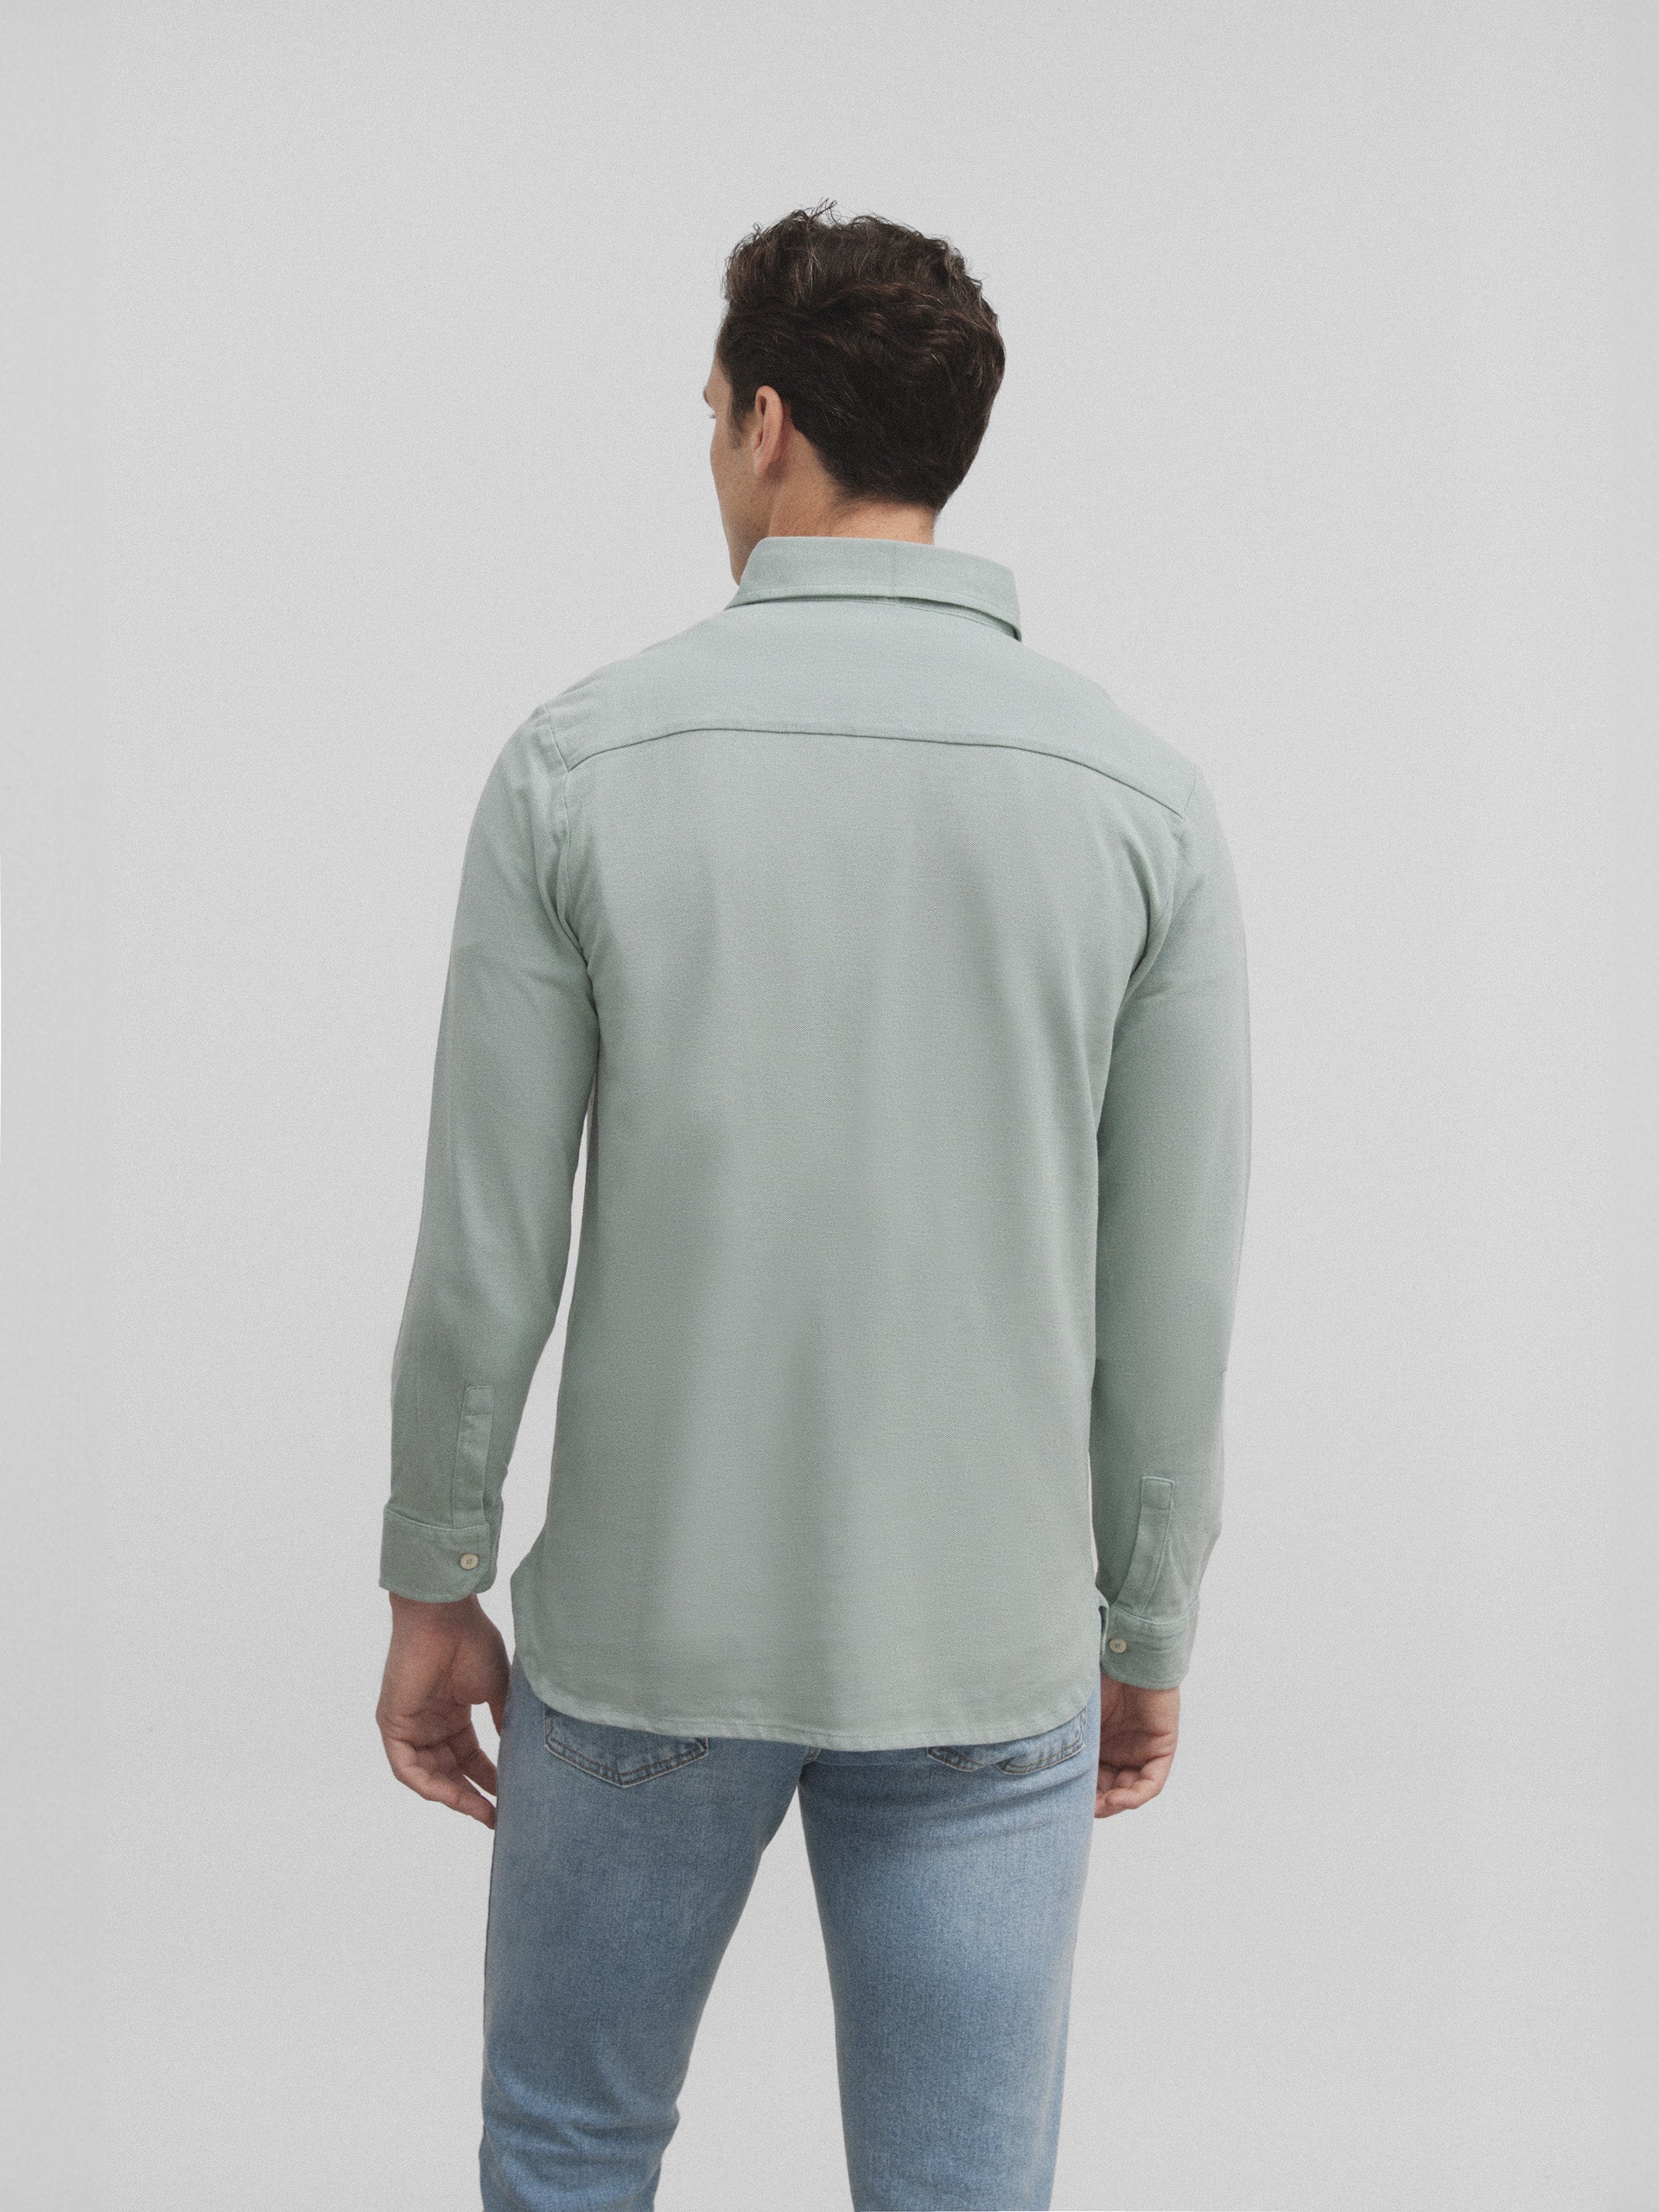 Medium green long sleeve plain polo shirt